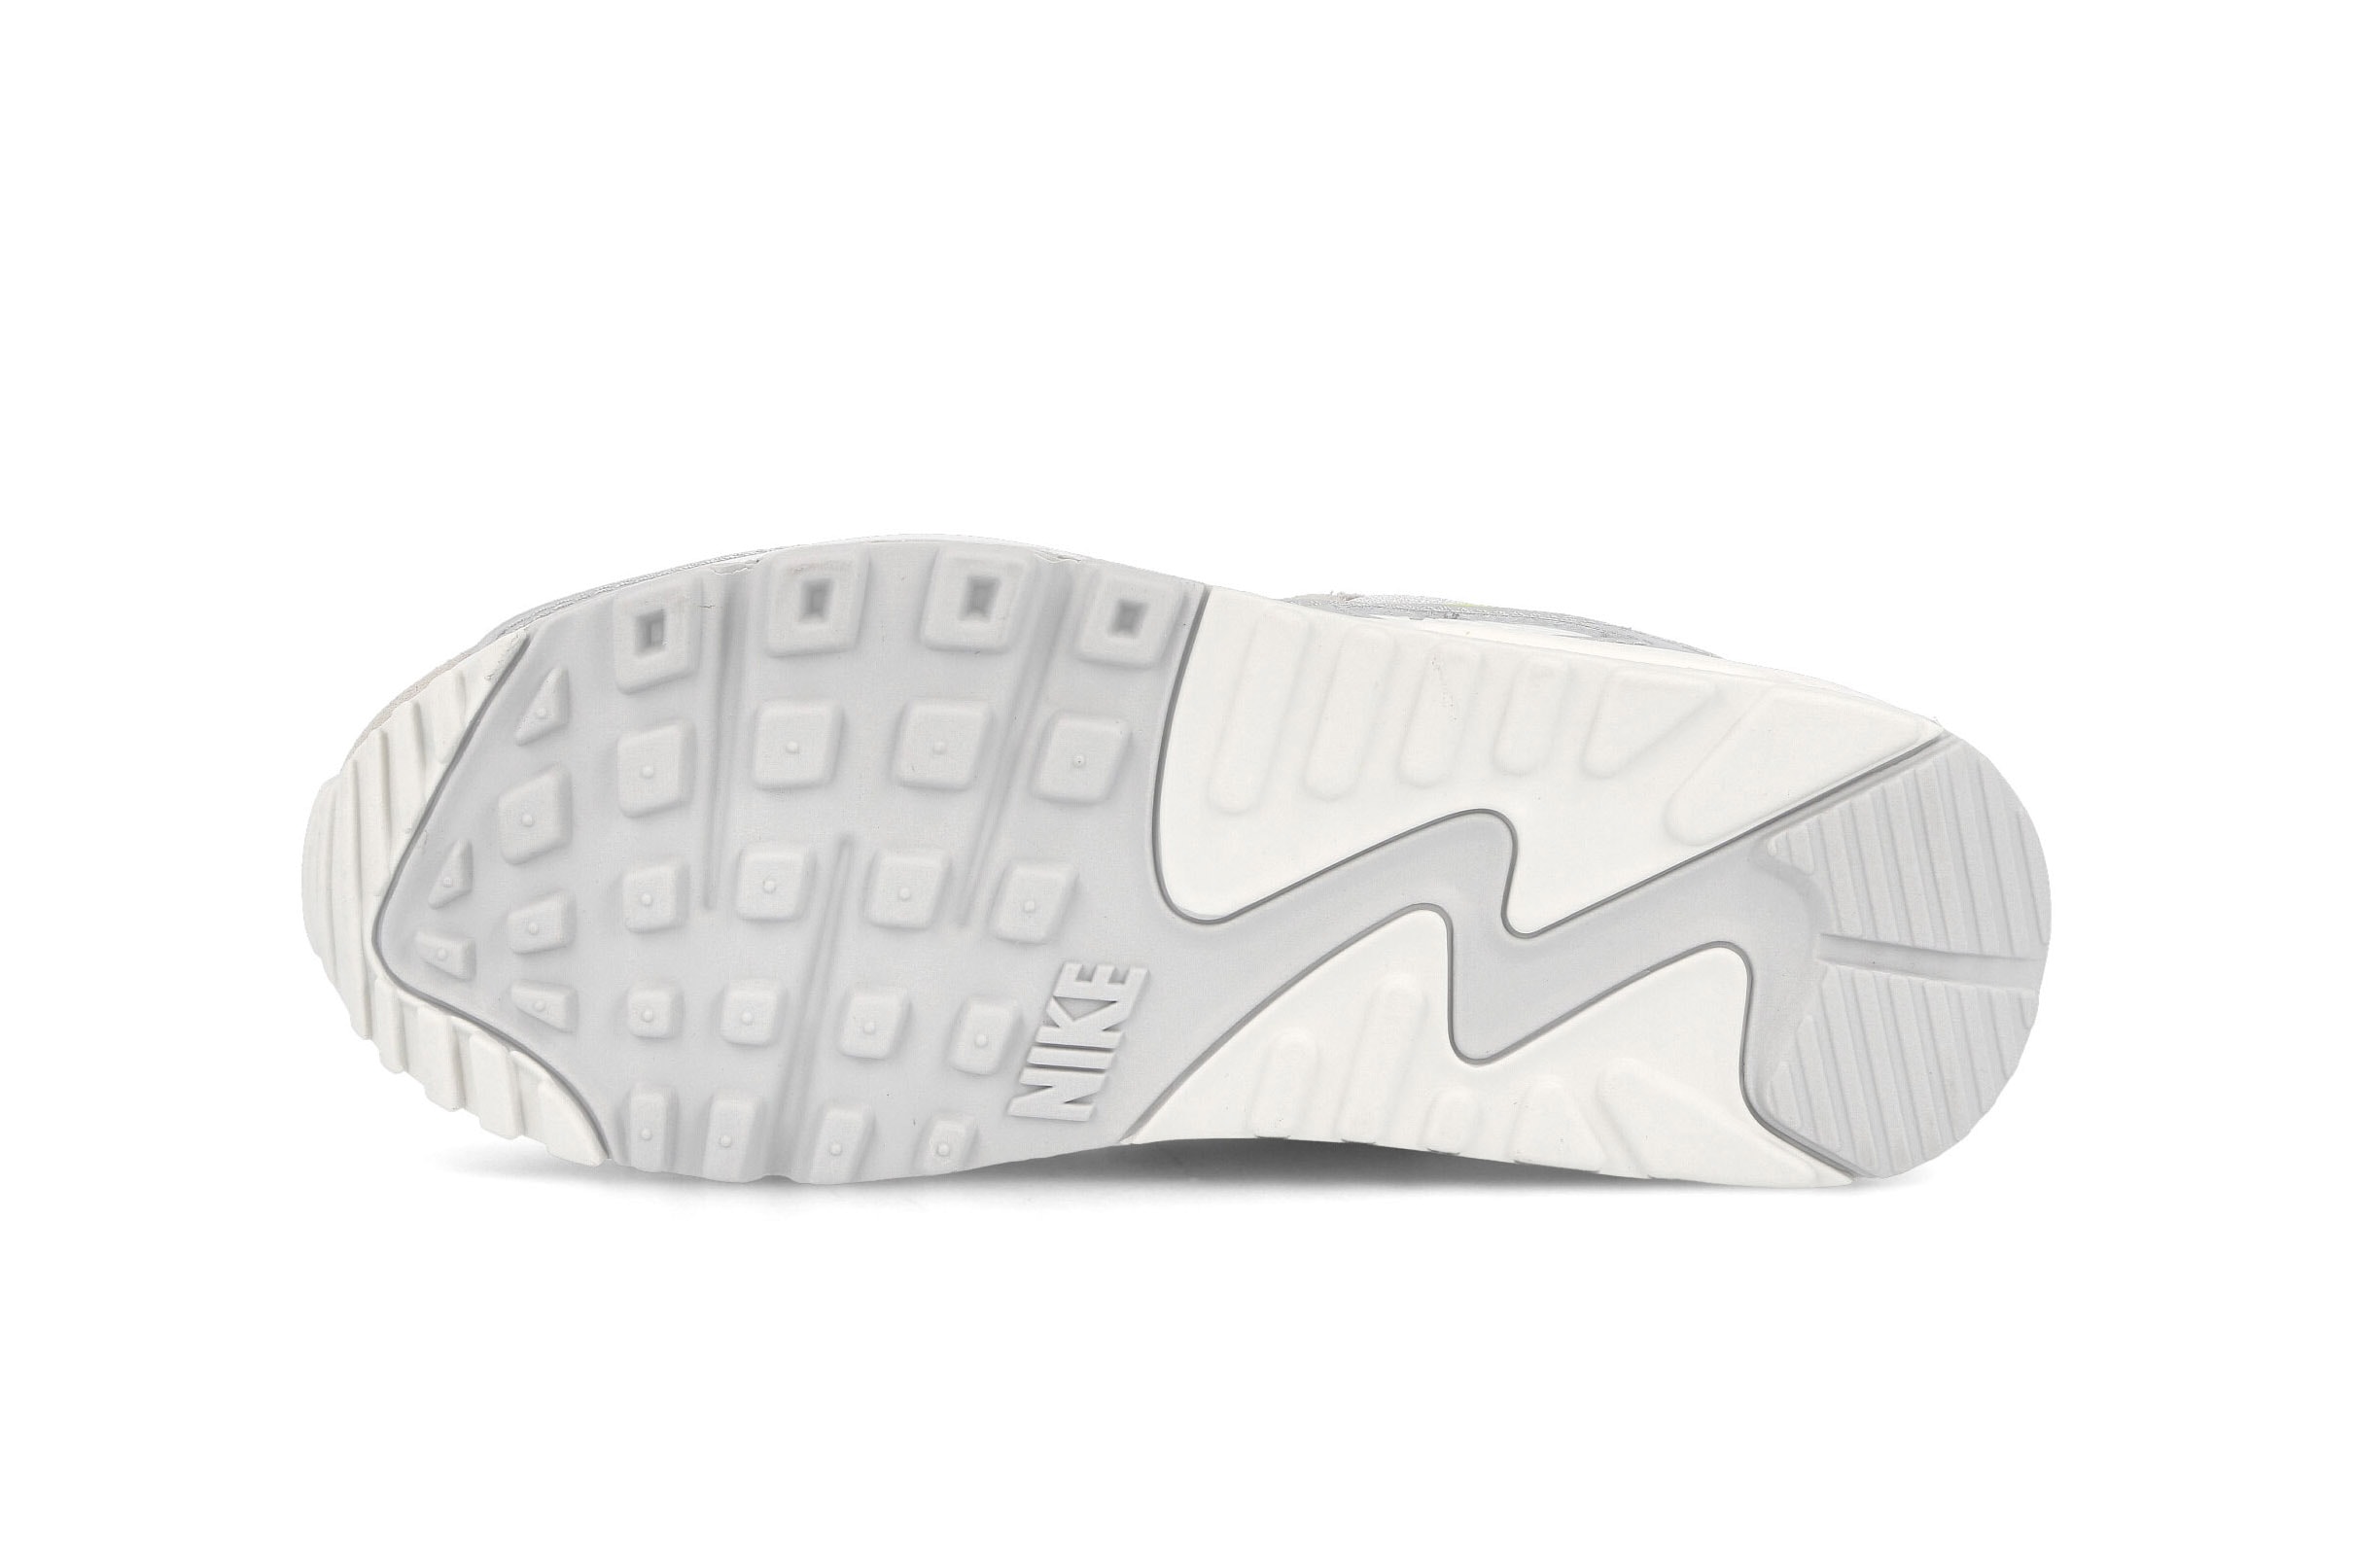 Nike Air Max 90 Pastel Yellow/Grey Sneaker Drop Air May Day 2020 Release